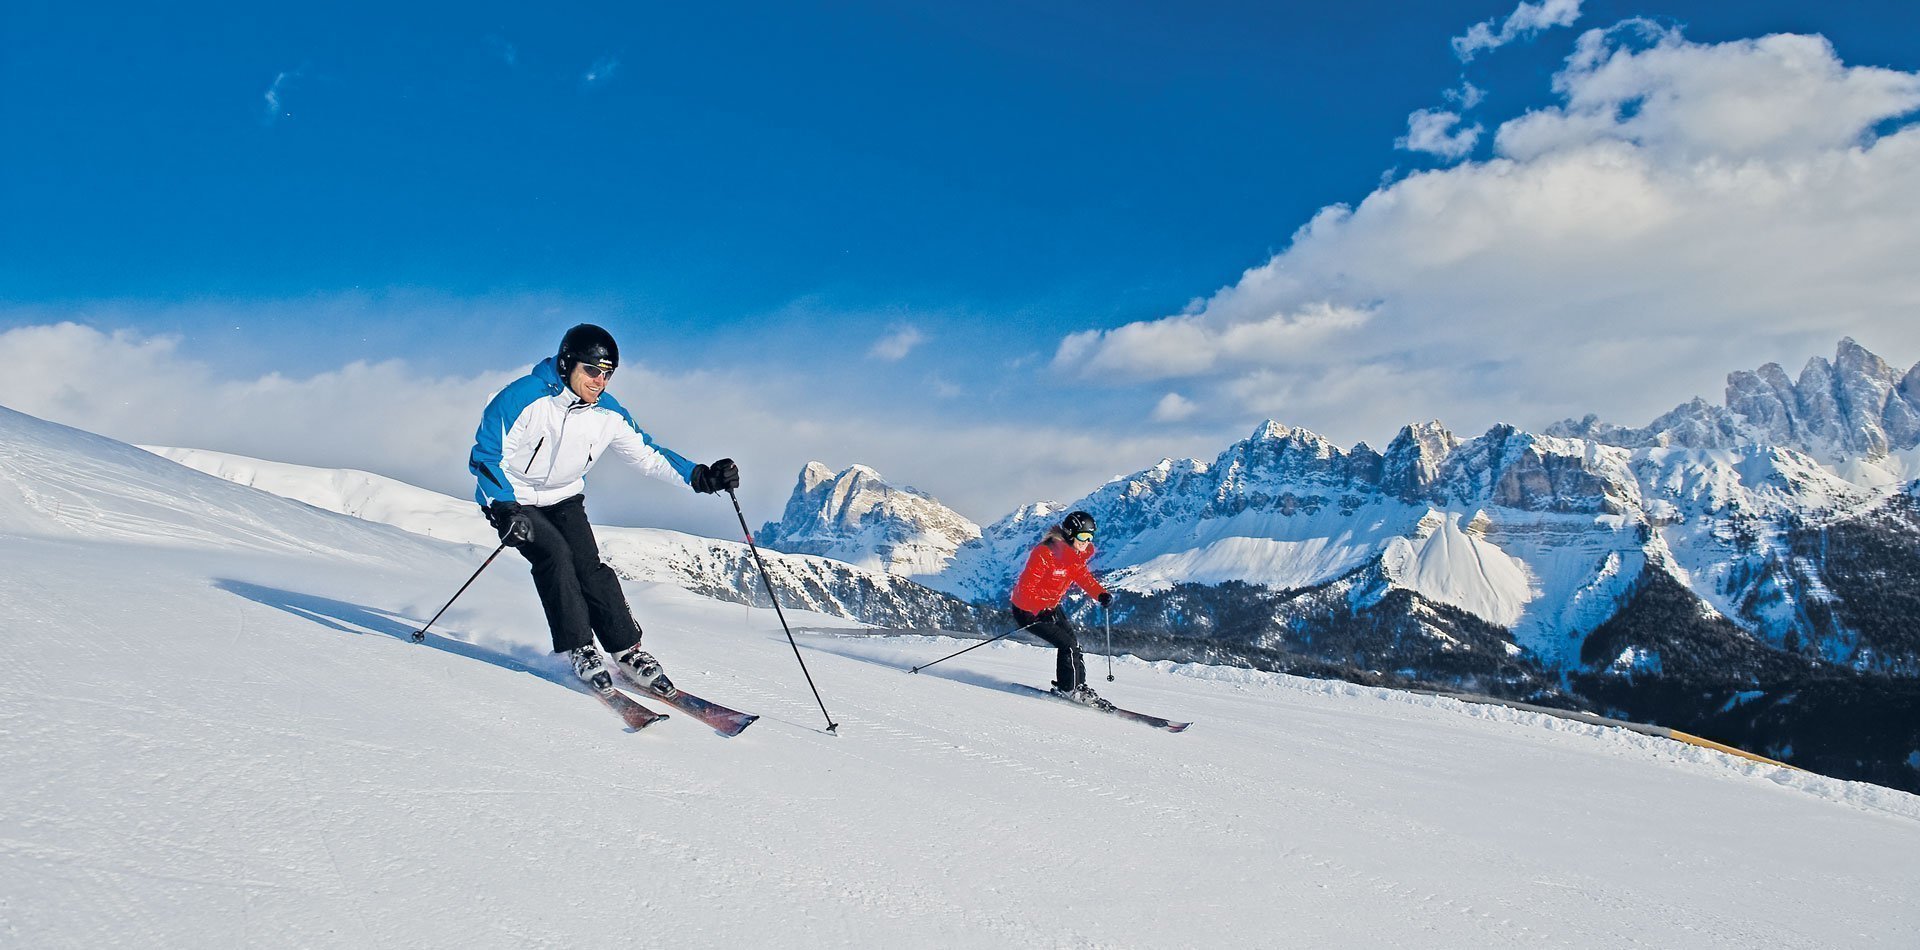 familienurlaub-skifahren-plose